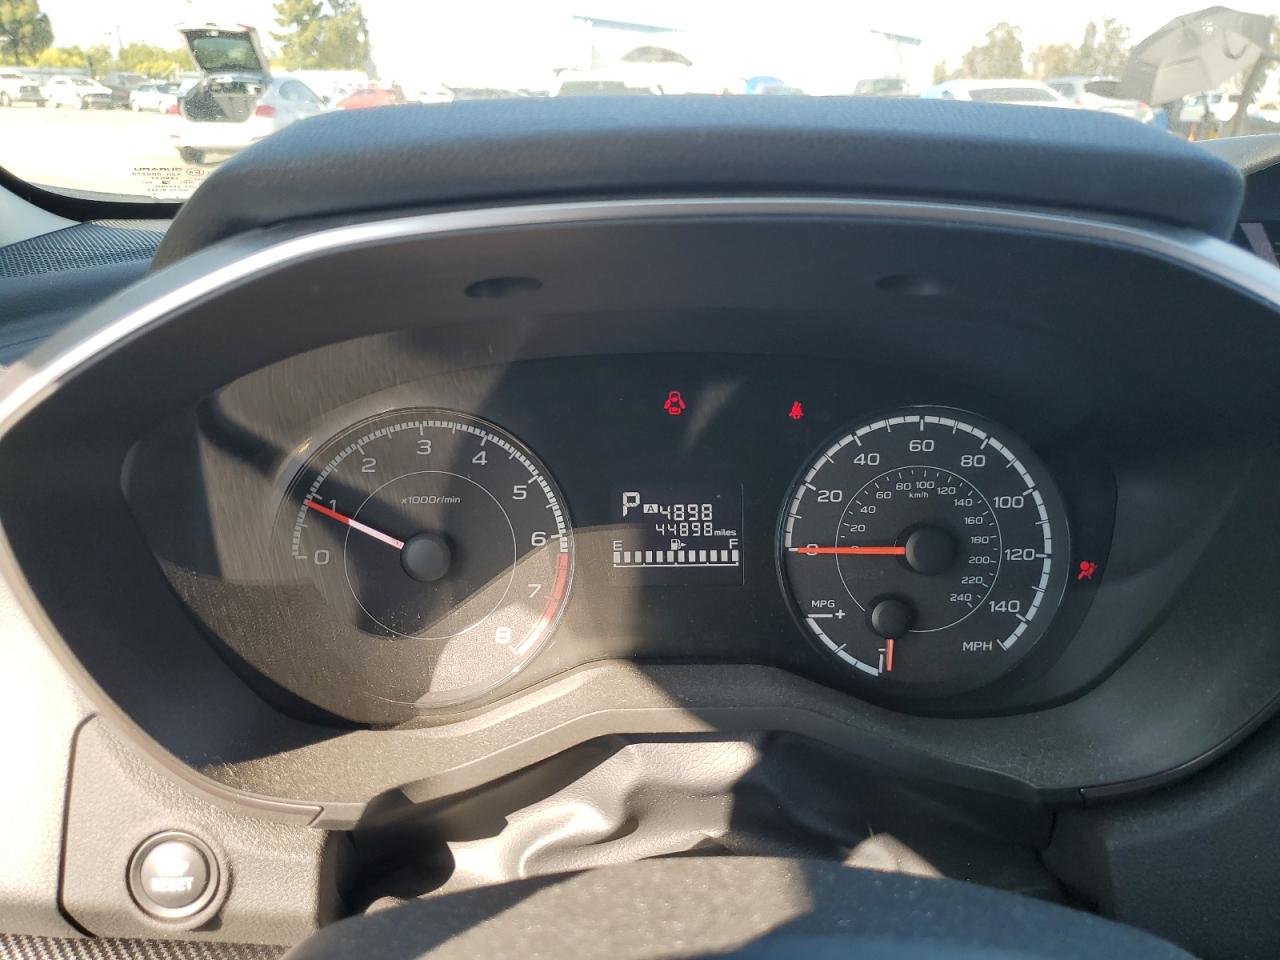 JF2GTACC2K8269253 2019 Subaru Crosstrek Premium